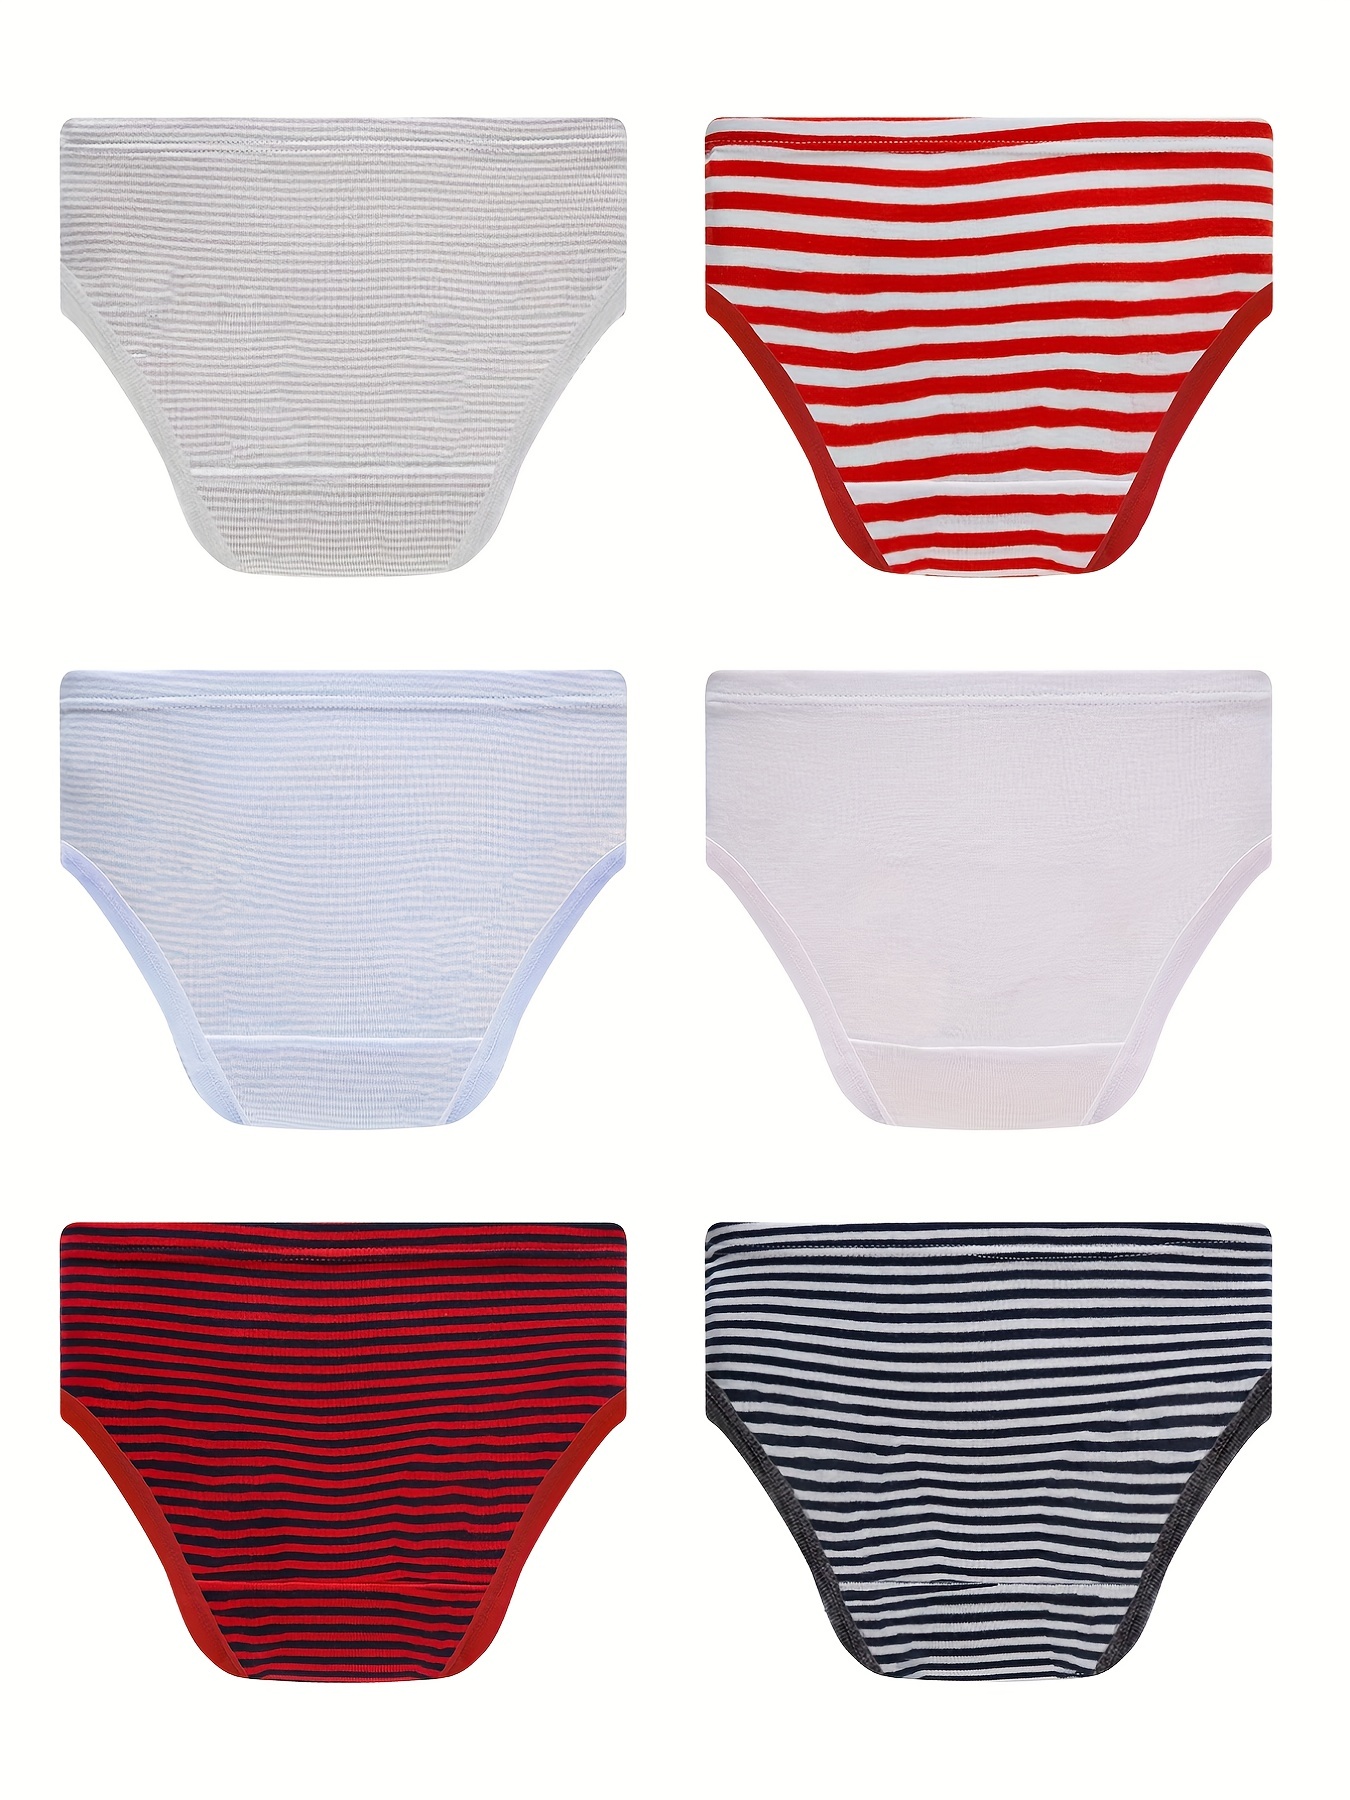 5Pcs/Pack Women Cotton Briefs Panties Triangle Striped Underwear